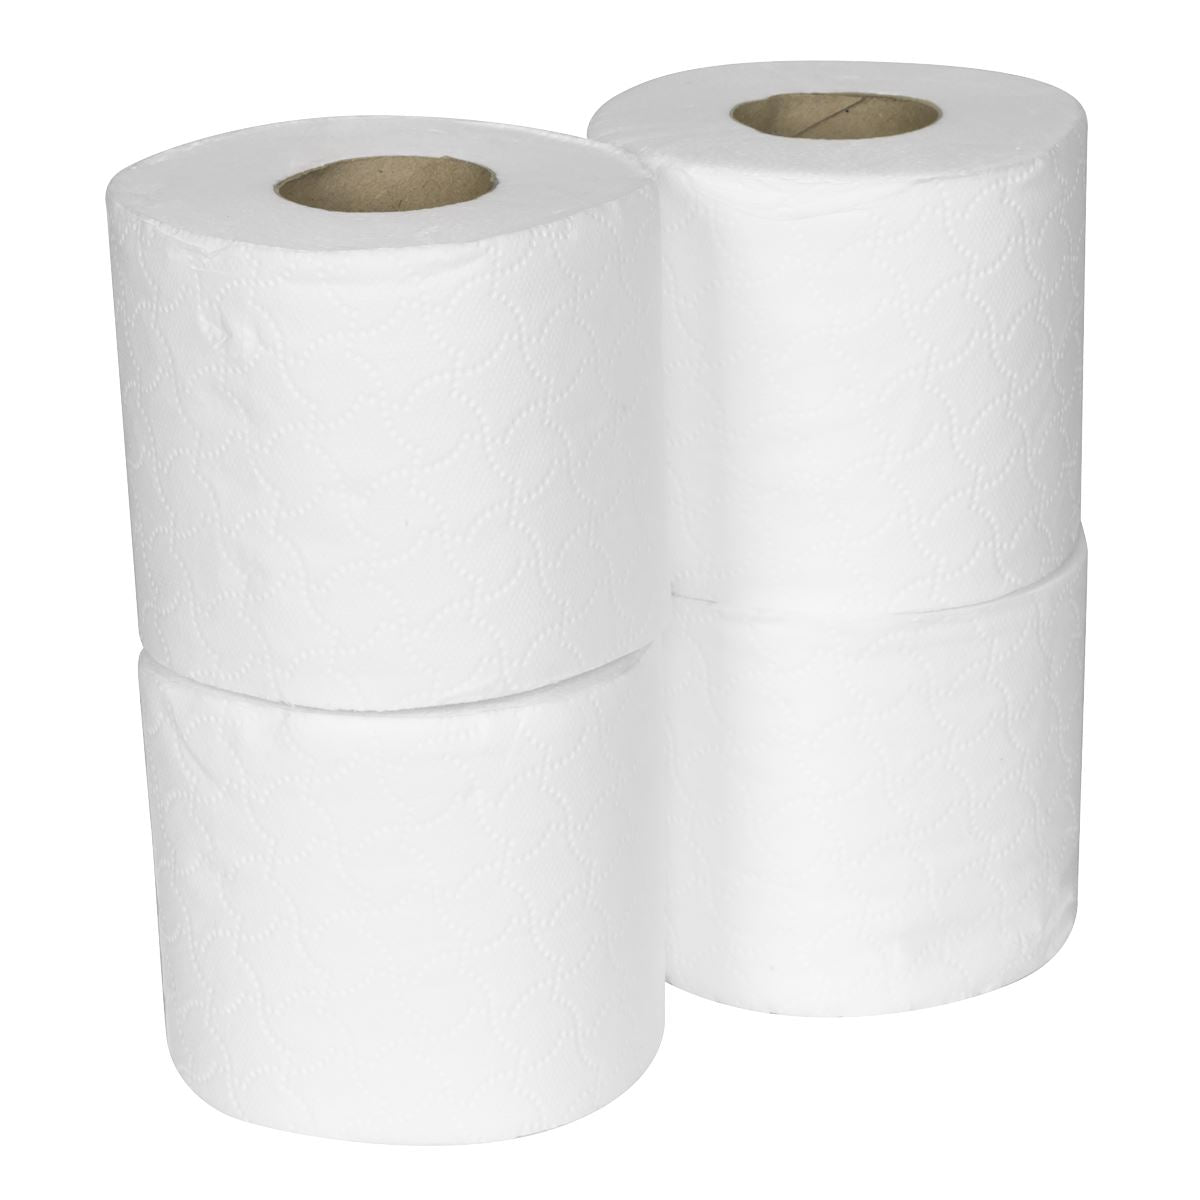 Sealey Plain White Toilet Roll - Pack of 4 x 10 (40 Rolls)